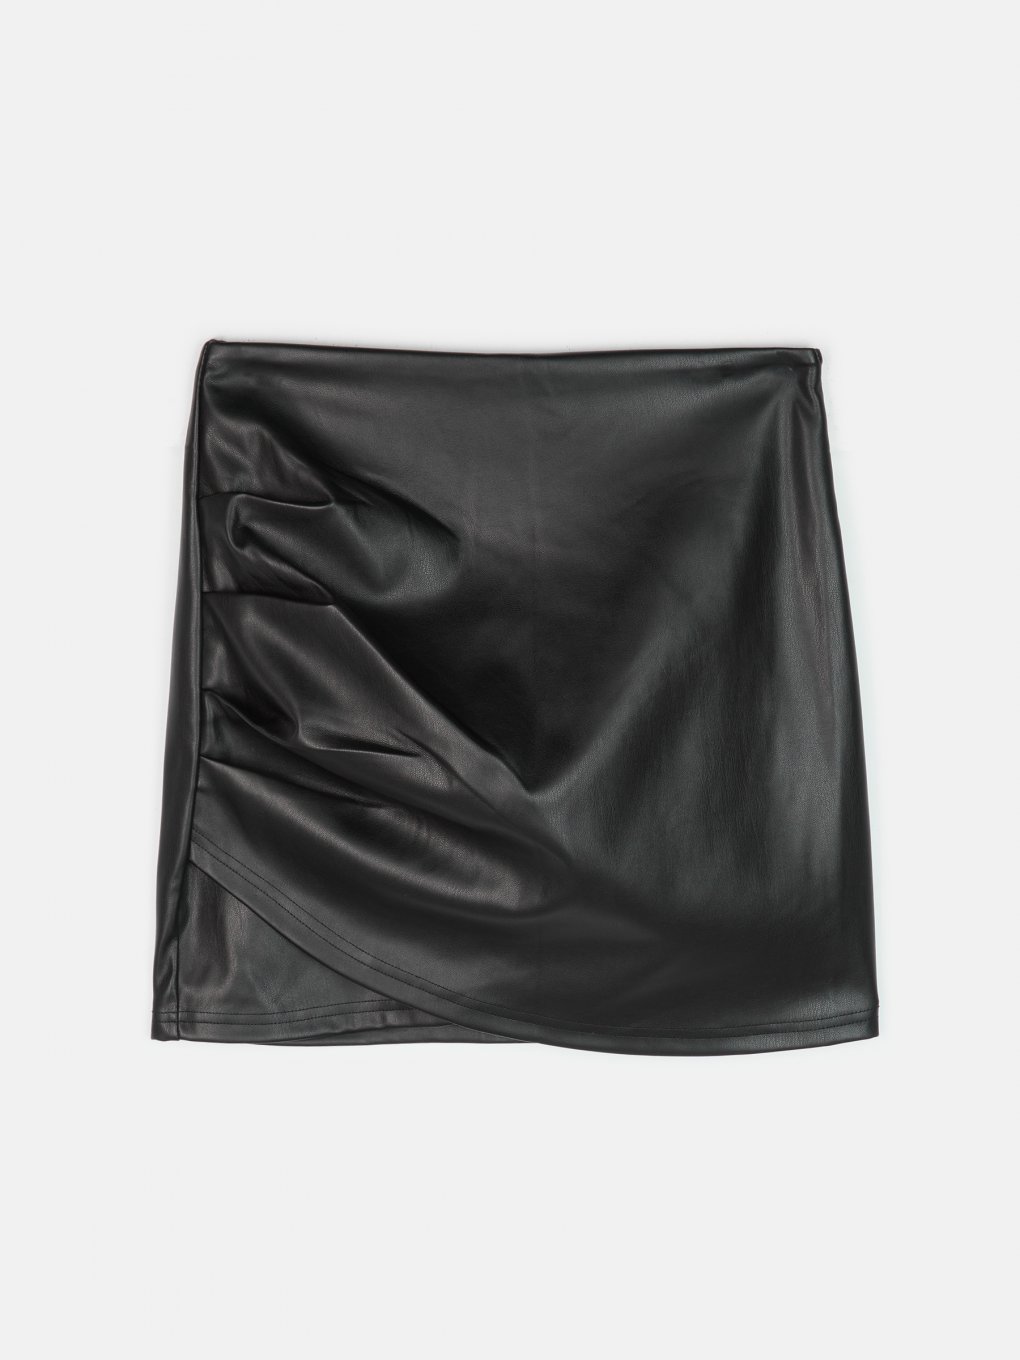 Faux leather mini skirt